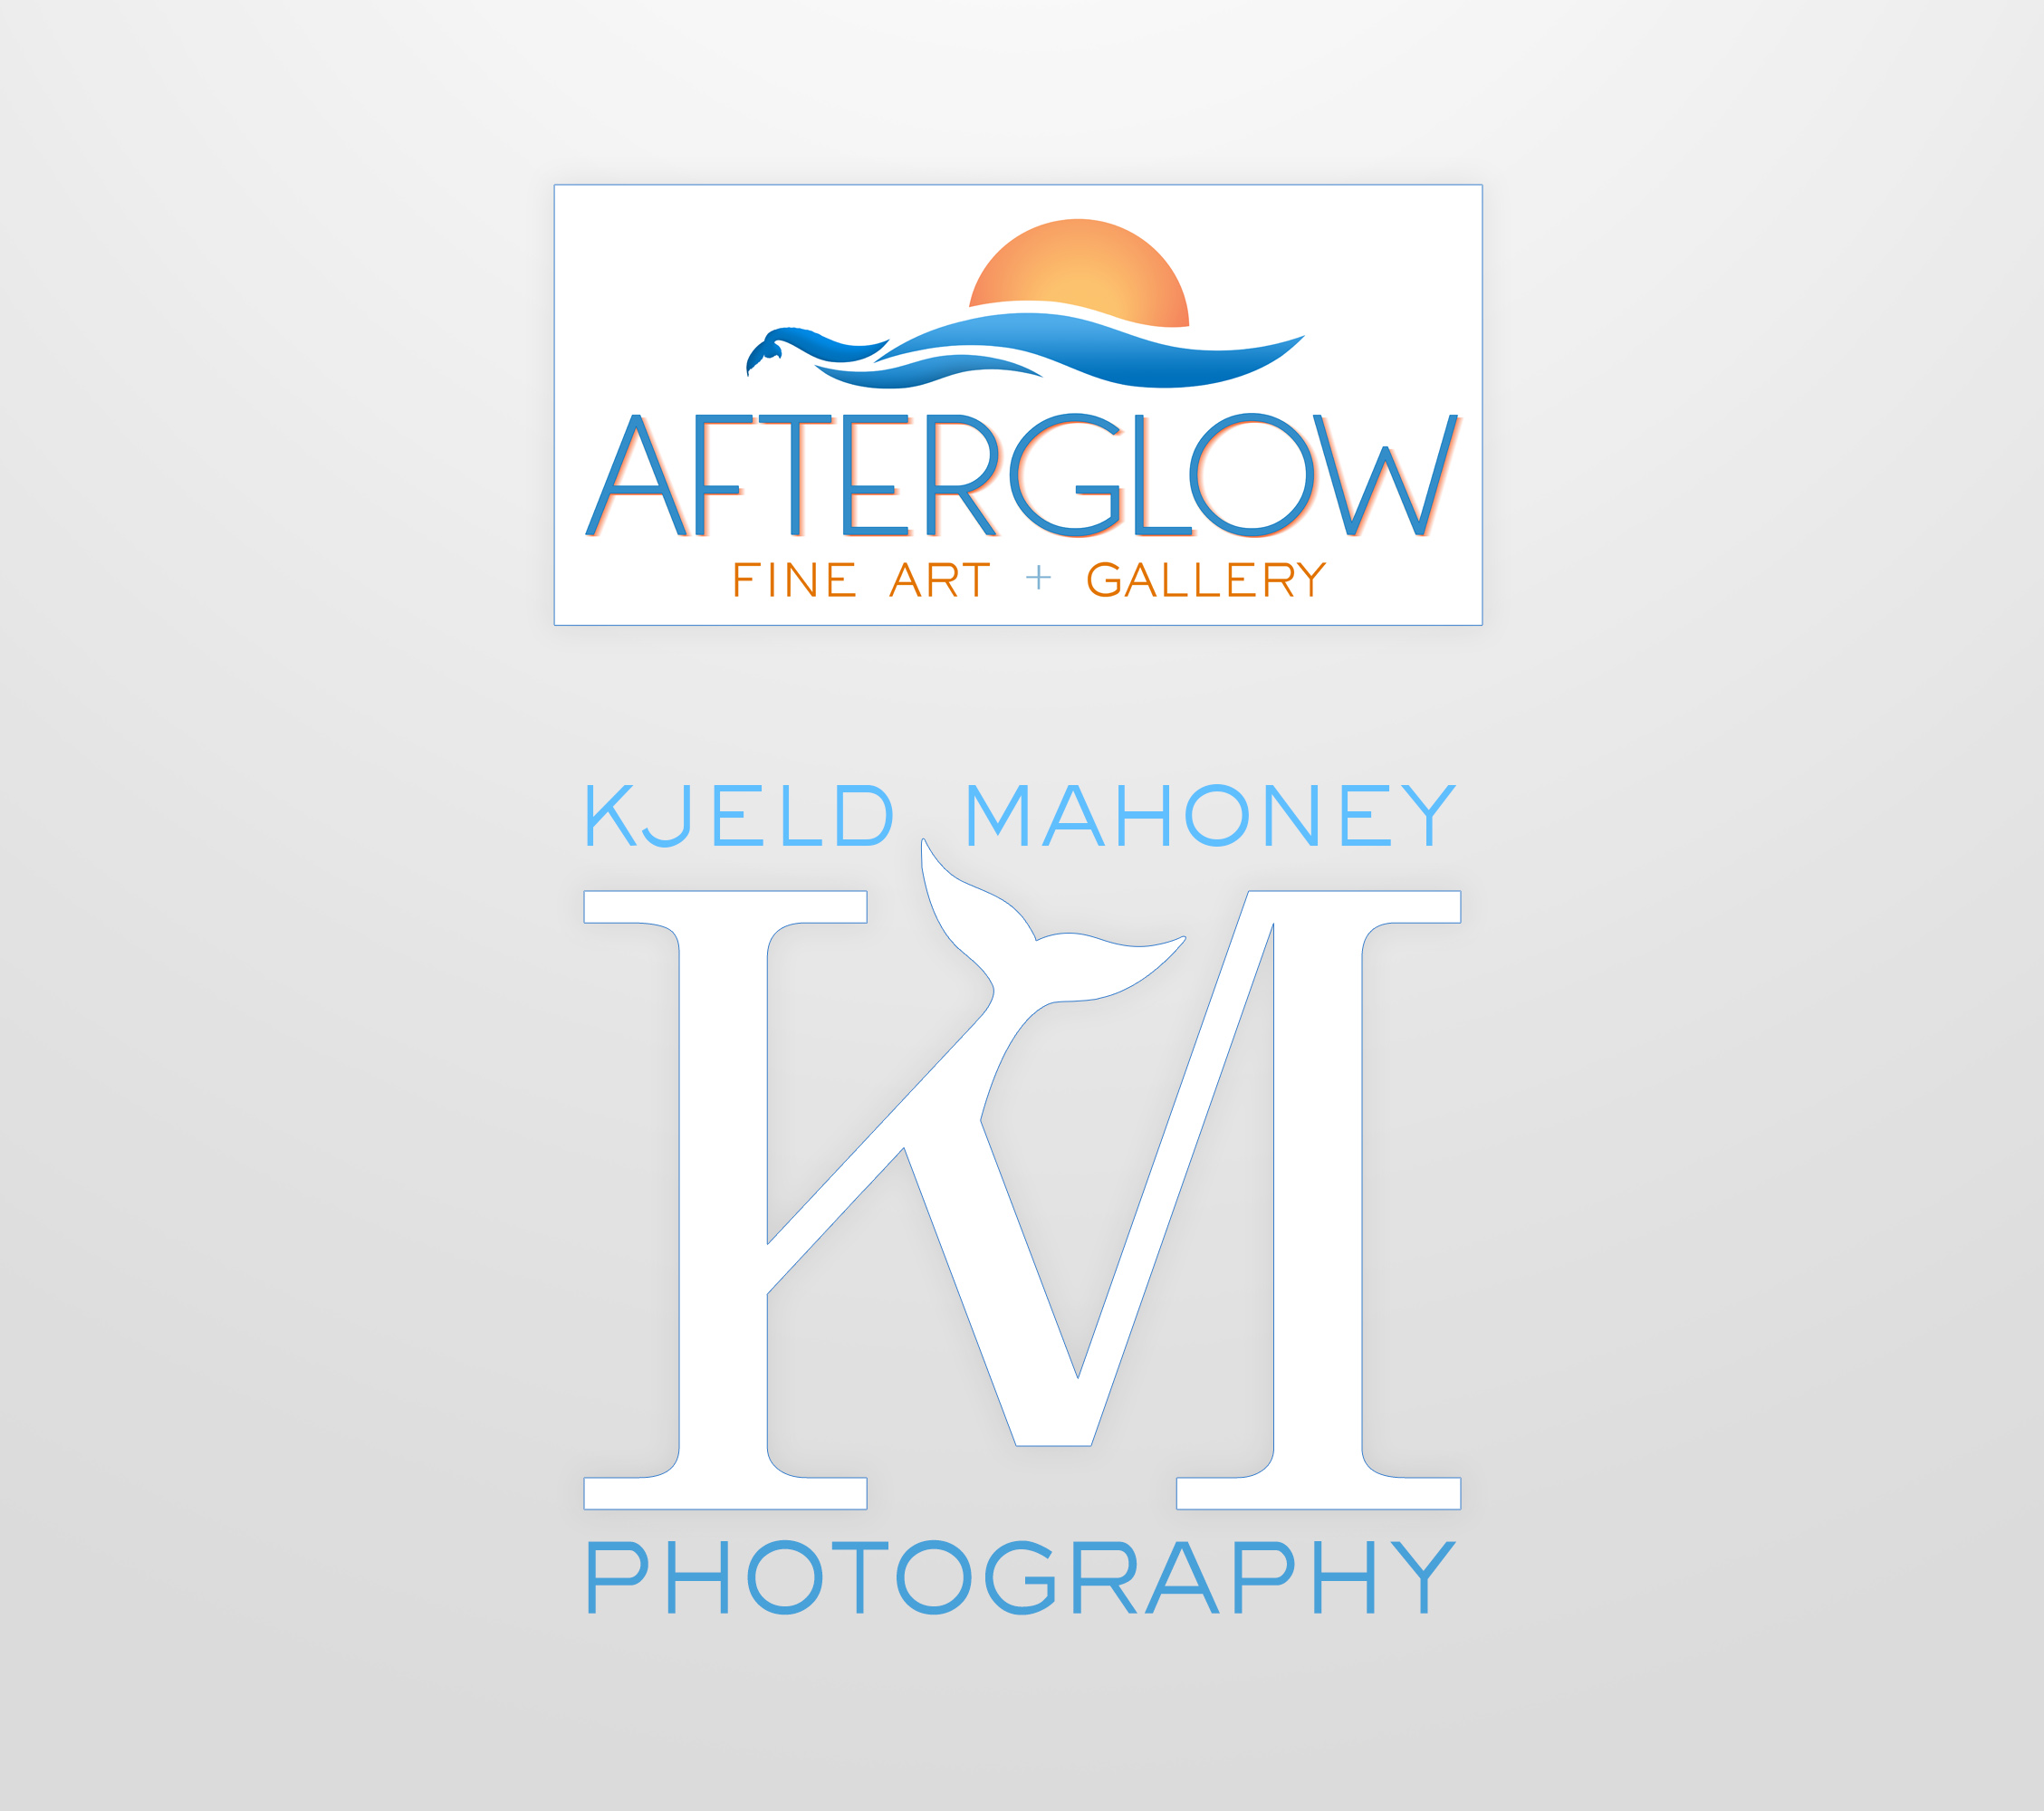 Kjeld Mahoney Photography/Afterglow Fine Art